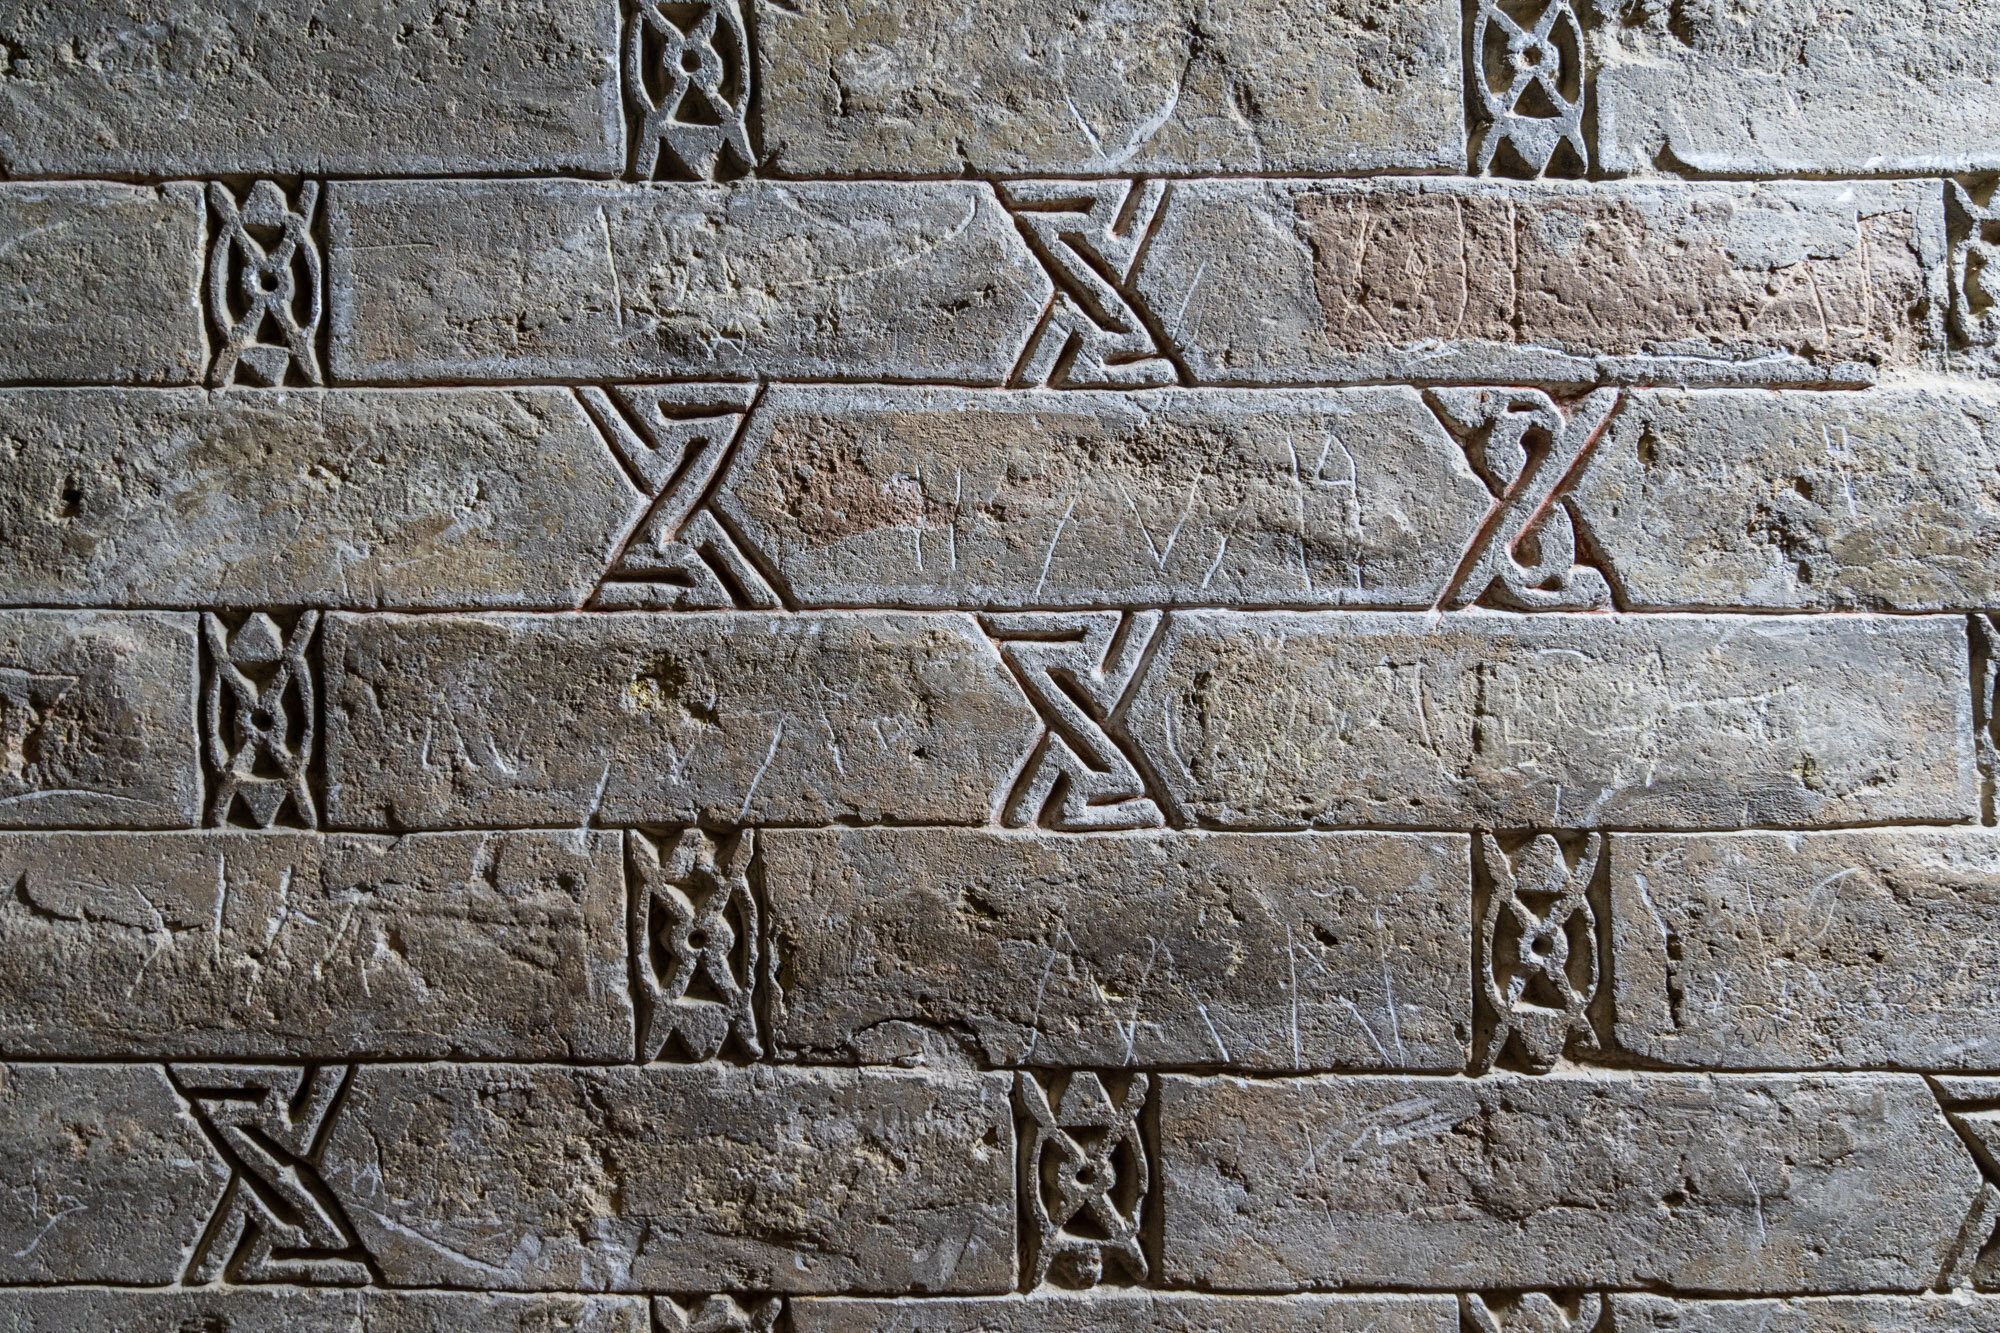  I believe these are Zoroastrian symbols, found on the interior brickwork 